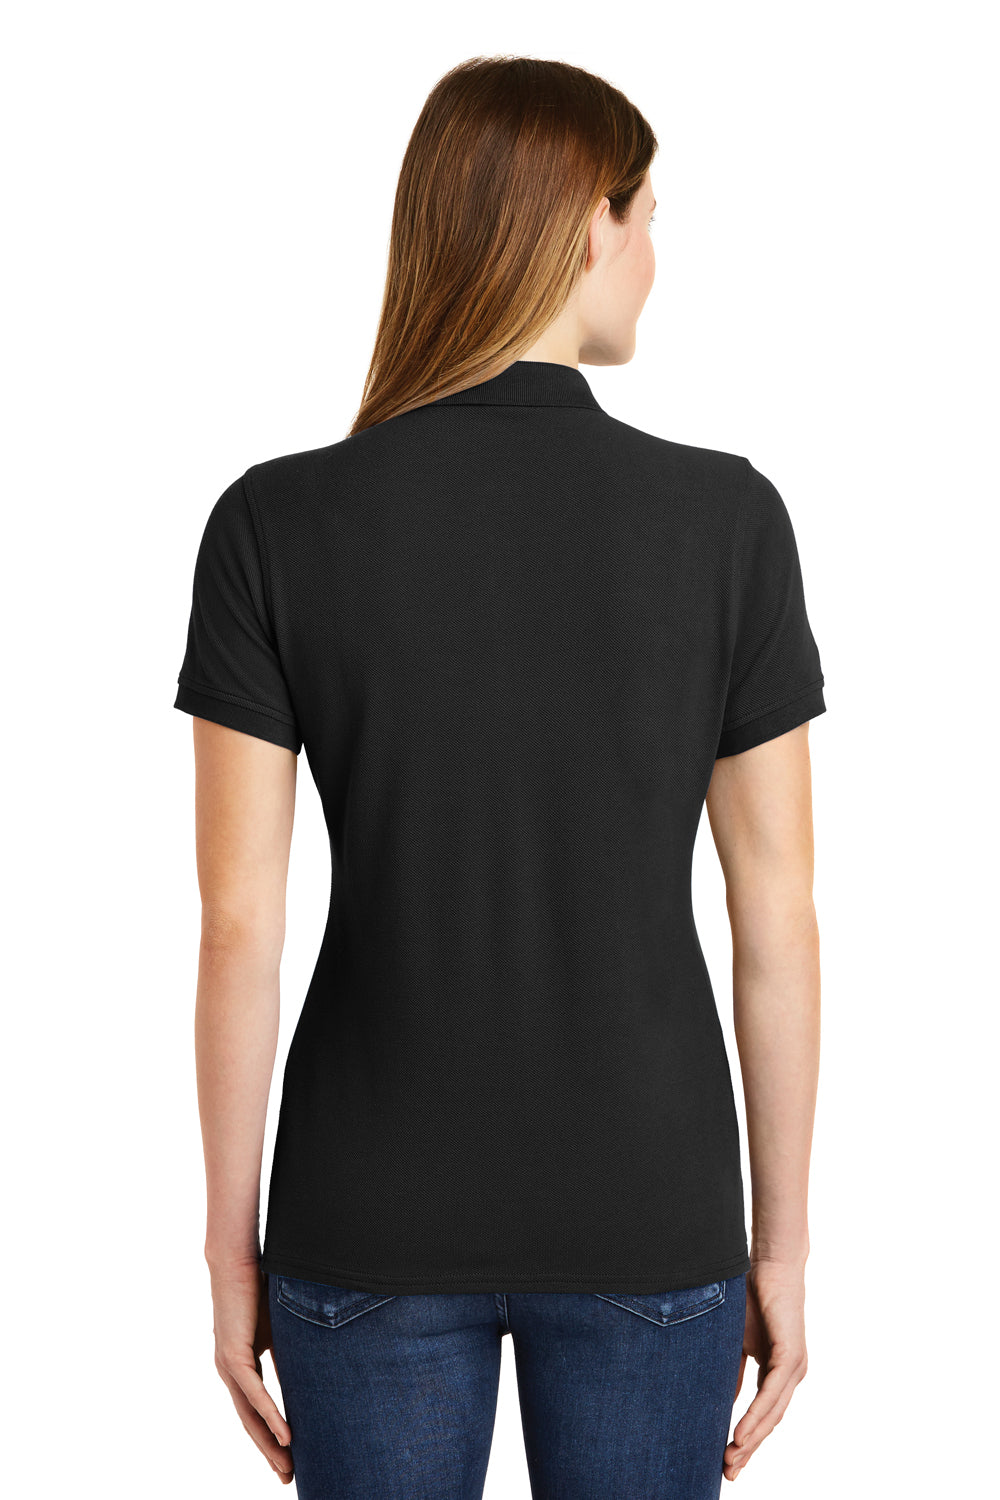 Port & Company LKP1500 Womens Stain Resistant Short Sleeve Polo Shirt Black Back